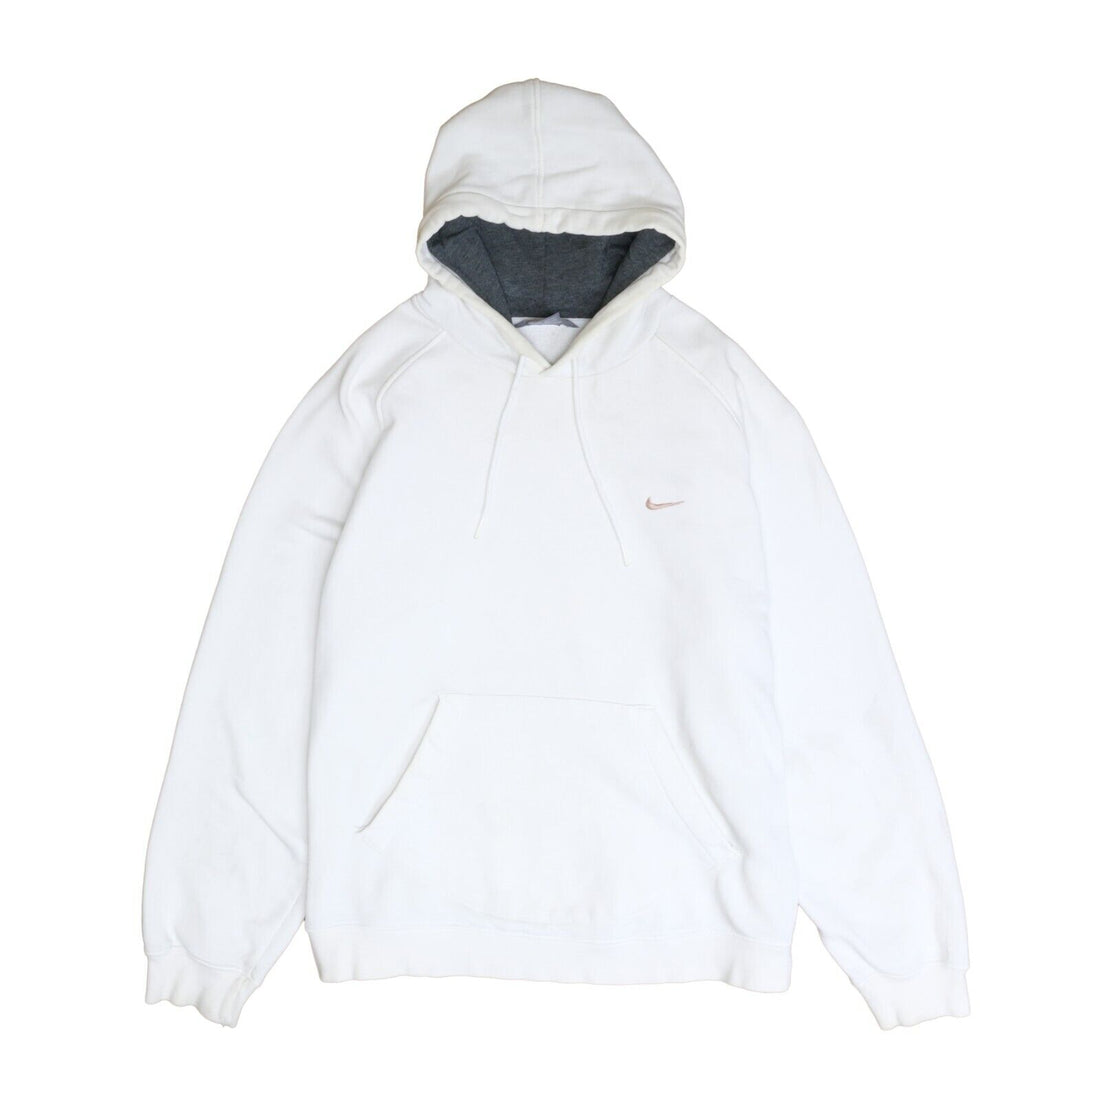 Vintage Nike Sweatshirt Hoodie Size Large White Embroidered Swoosh